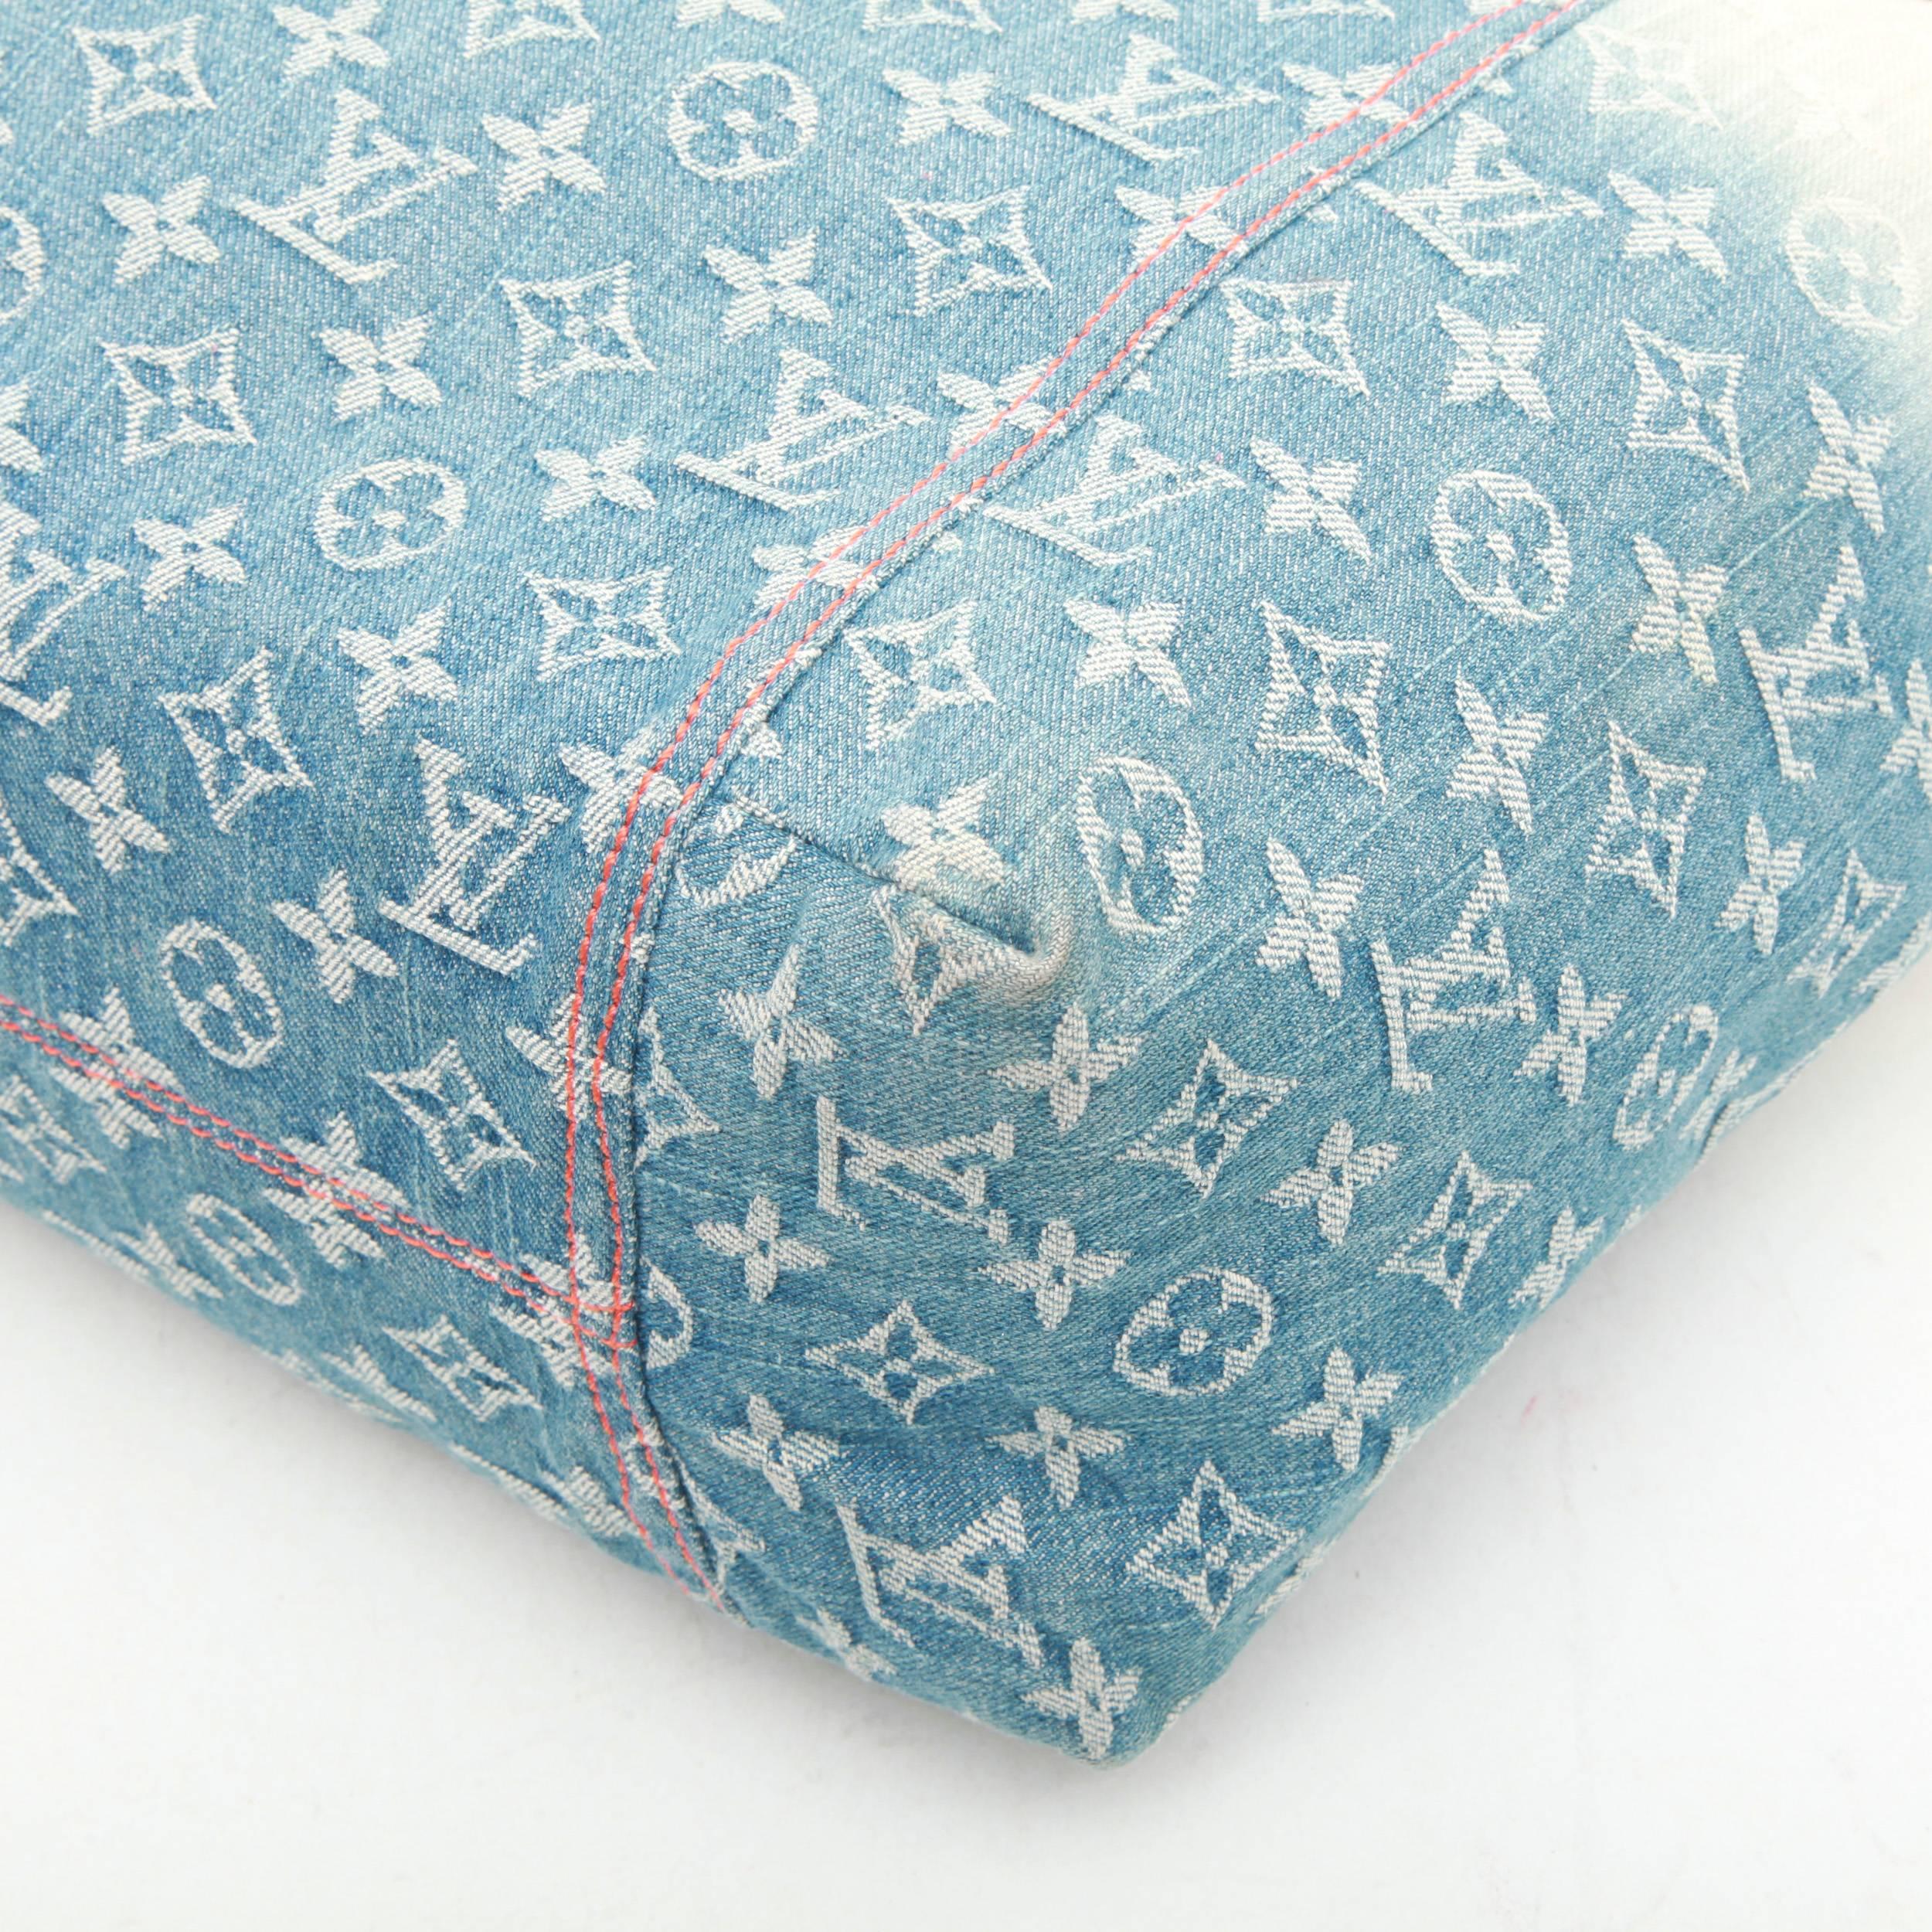 Women's LOUIS VUITTON Tota Bag in two-Tone Blue to Beige Monogram Fabric